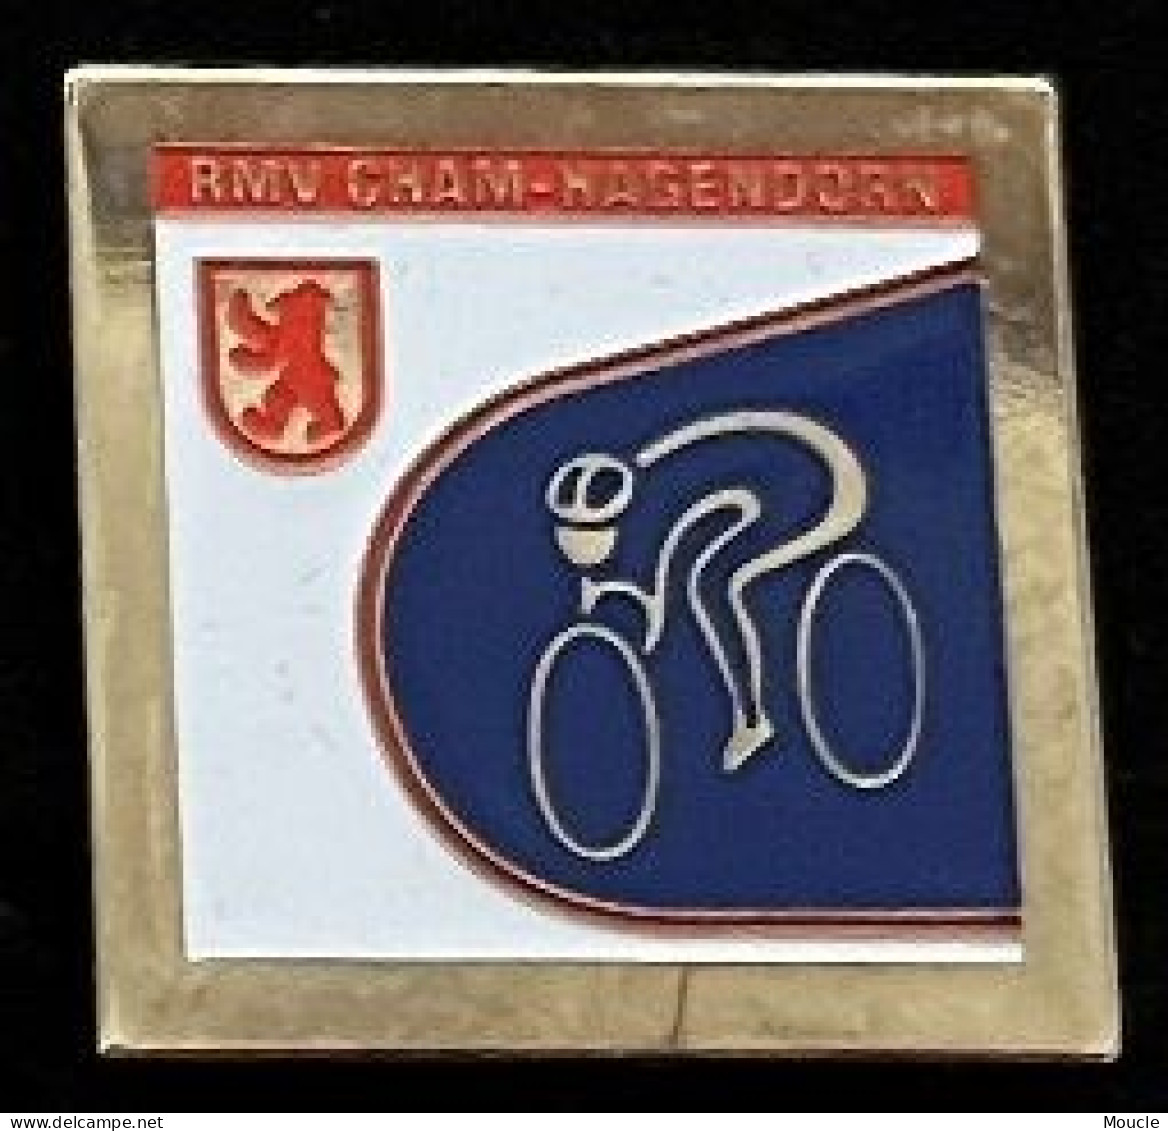 CYCLISME - VELO - BIKE - CYCLISTE - CYCLES - RMV - VELO CLUB - CHAM - HAGENDORN - SUISSE - SCHWEIZ - SWITZERLAND -  (33) - Wielrennen